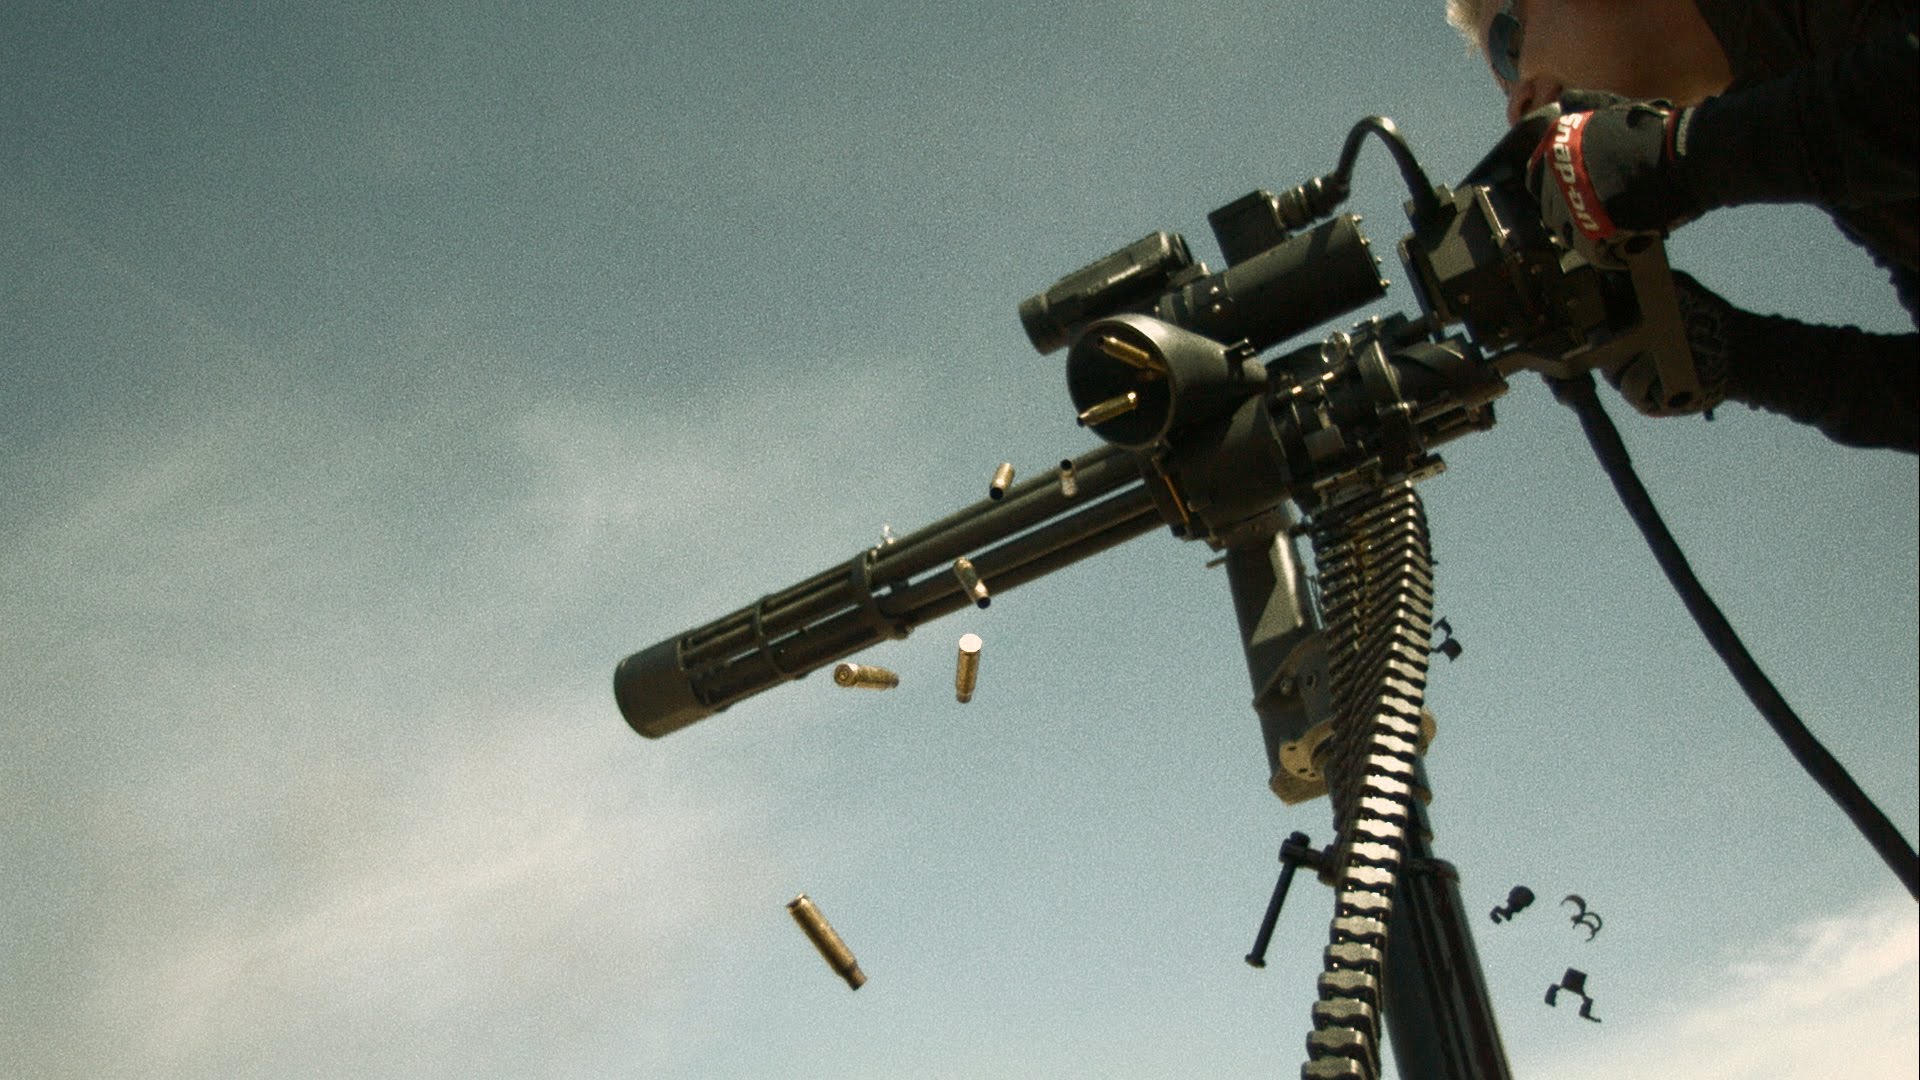 M134 Minigun Backgrounds on Wallpapers Vista